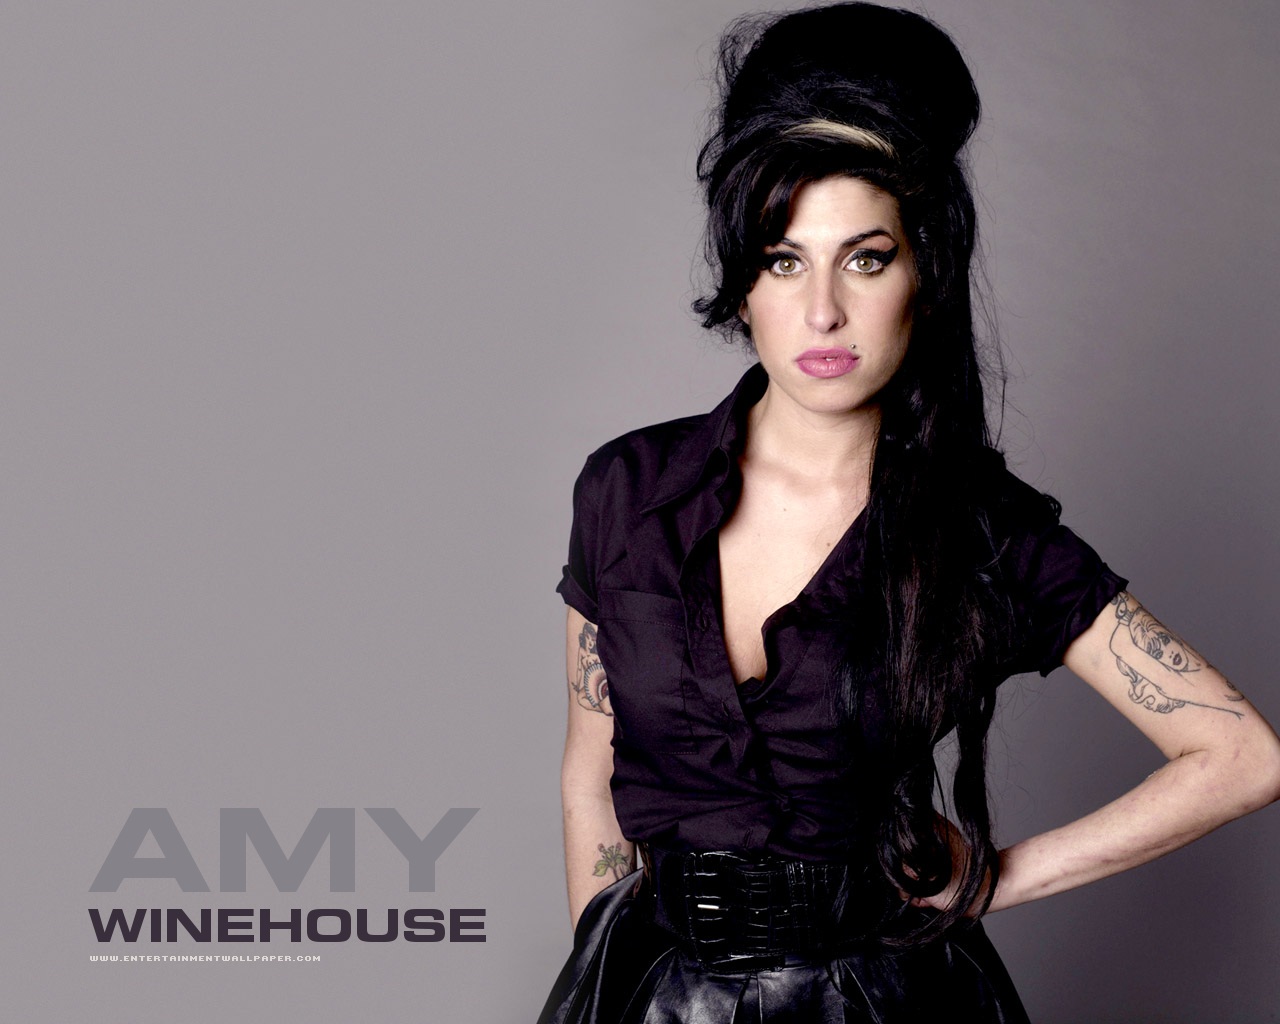 http://1.bp.blogspot.com/_fPiHcX-4-QE/TEE1rXJ4AzI/AAAAAAAABC0/OV5wX8DSphw/s1600/Amy+Winehouse.jpg